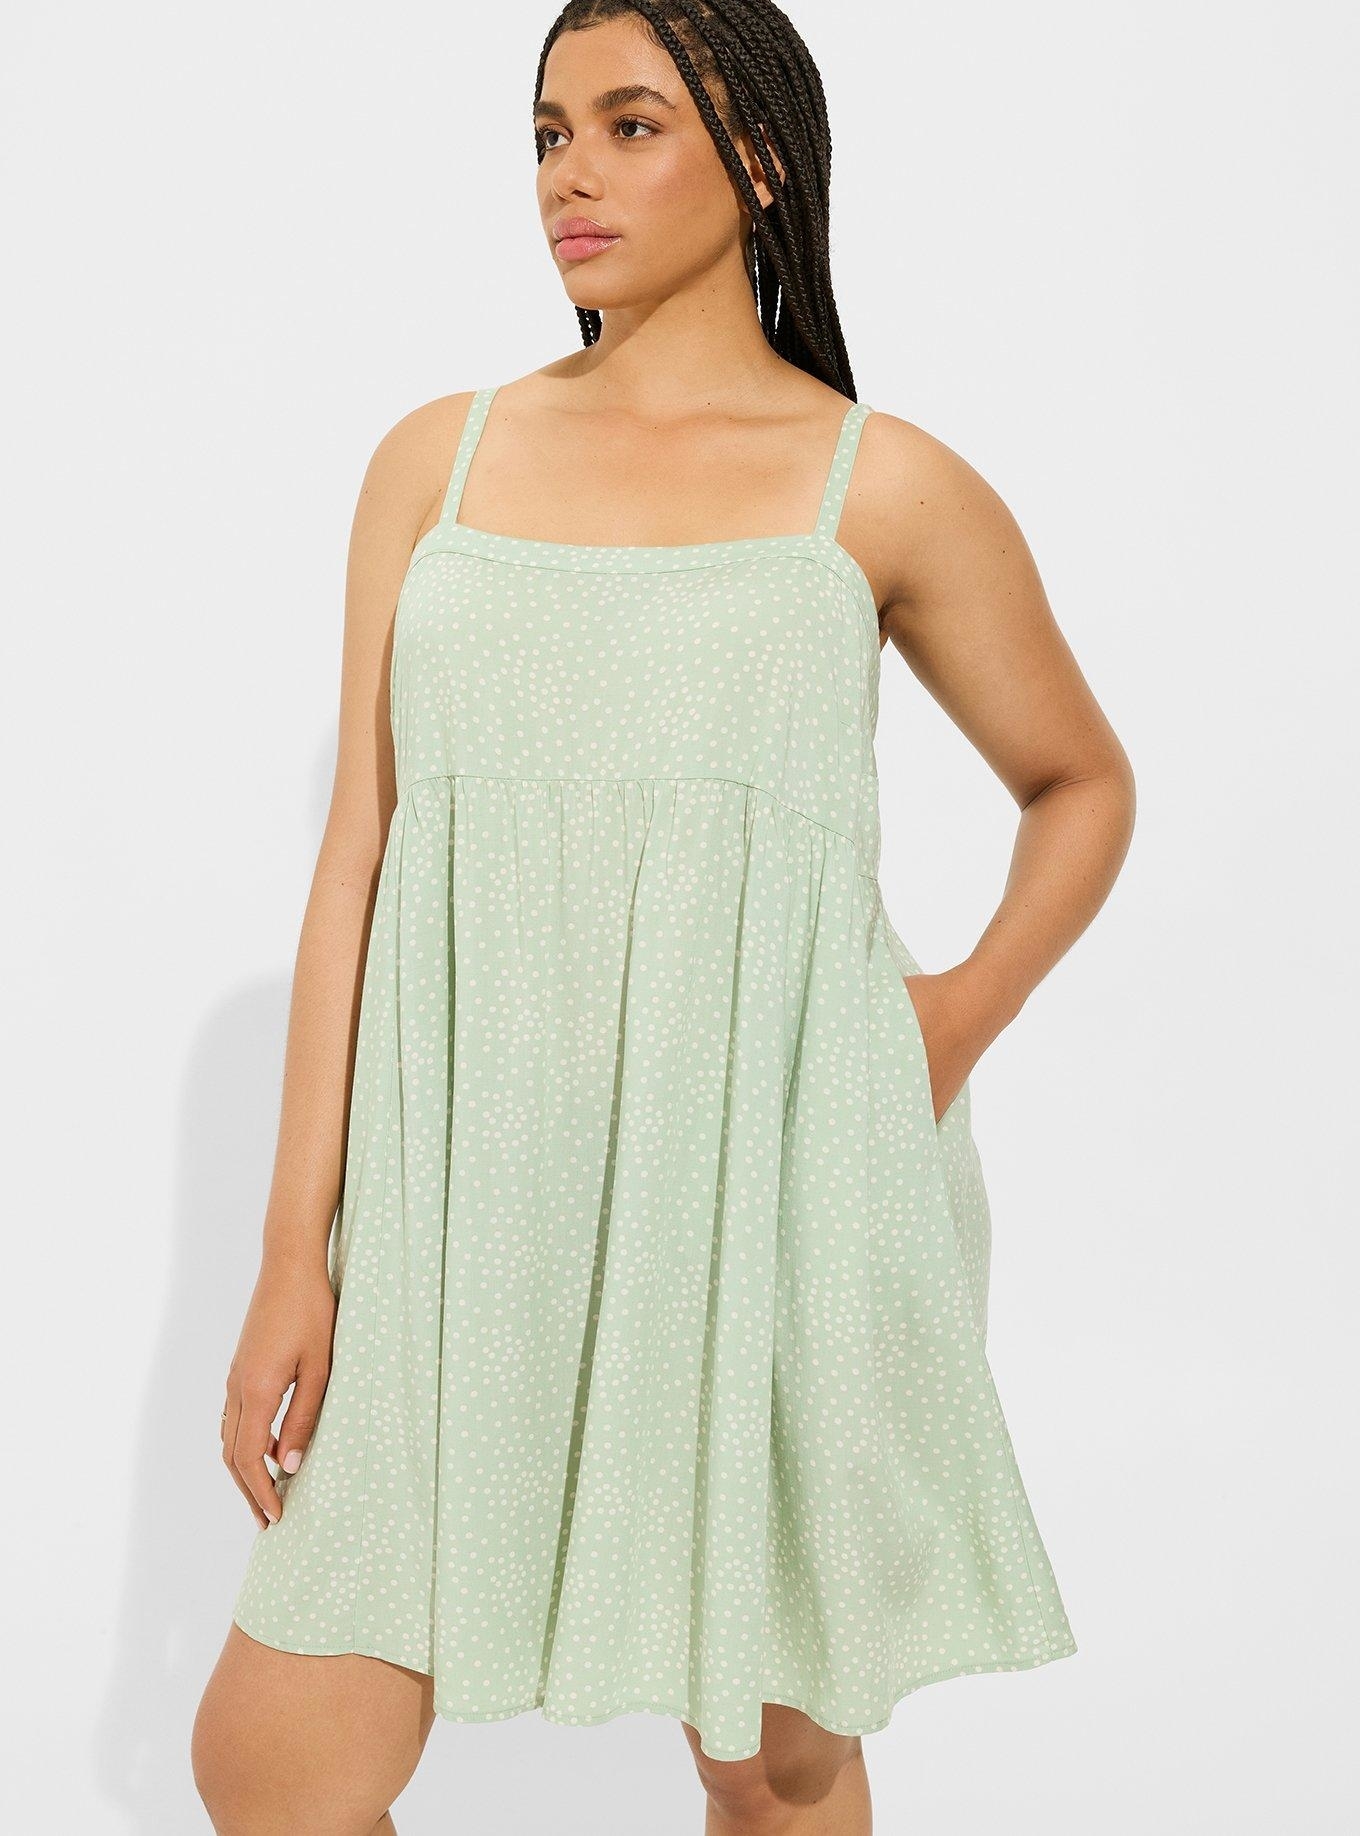 Model wearing the green dot dress